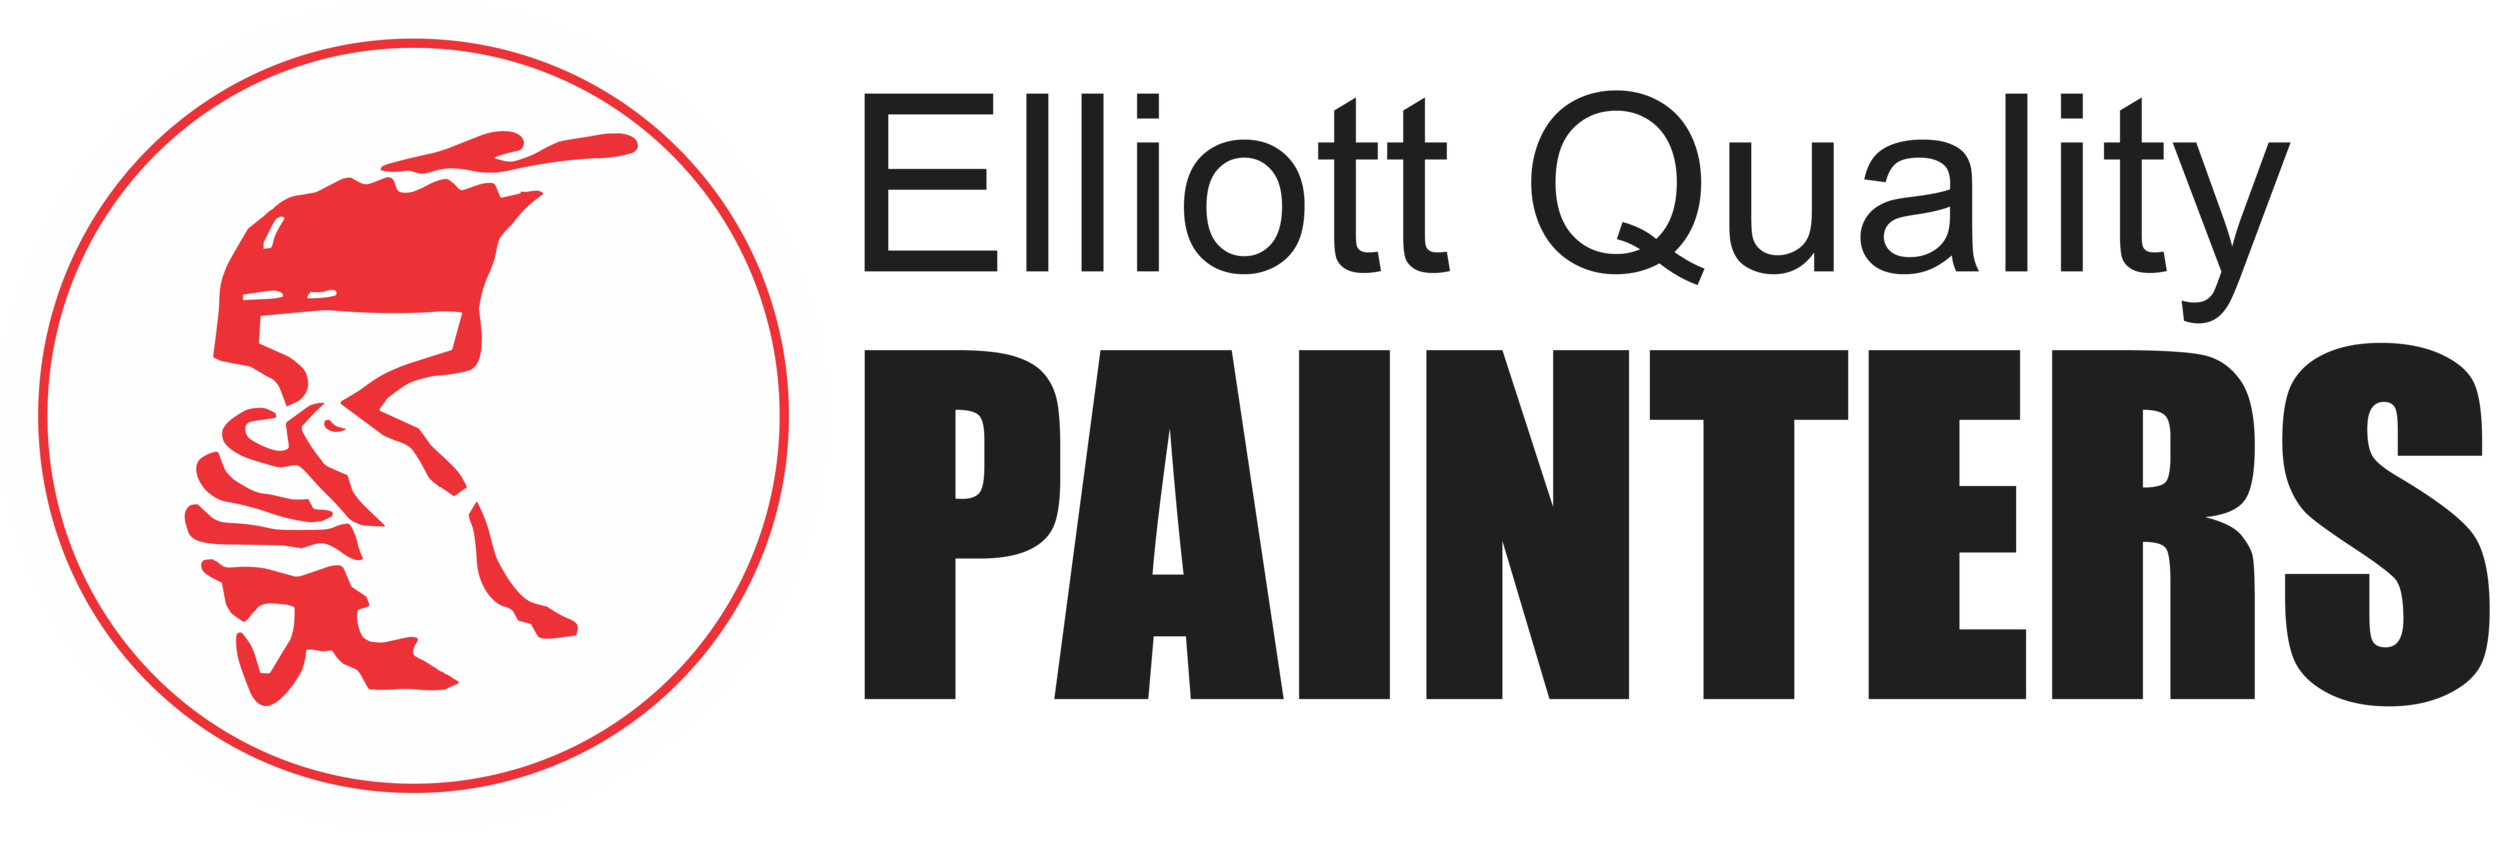 Elliot Quality Painters